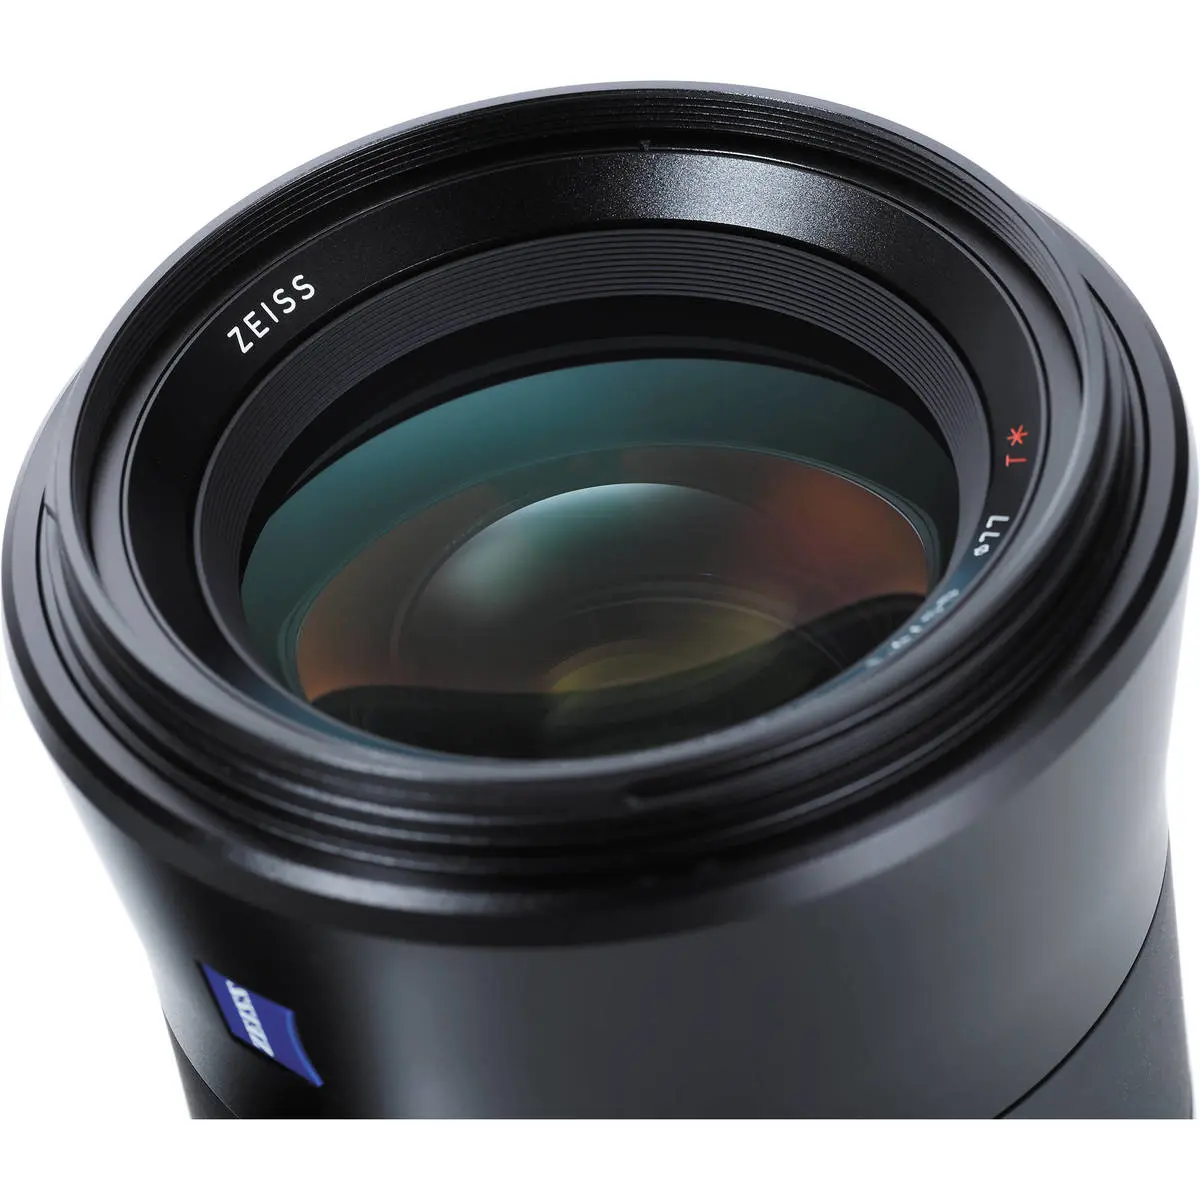 6. Carl Zeiss Otus Distagon T* 1.4/55 ZF.2 (Nikon) Lens